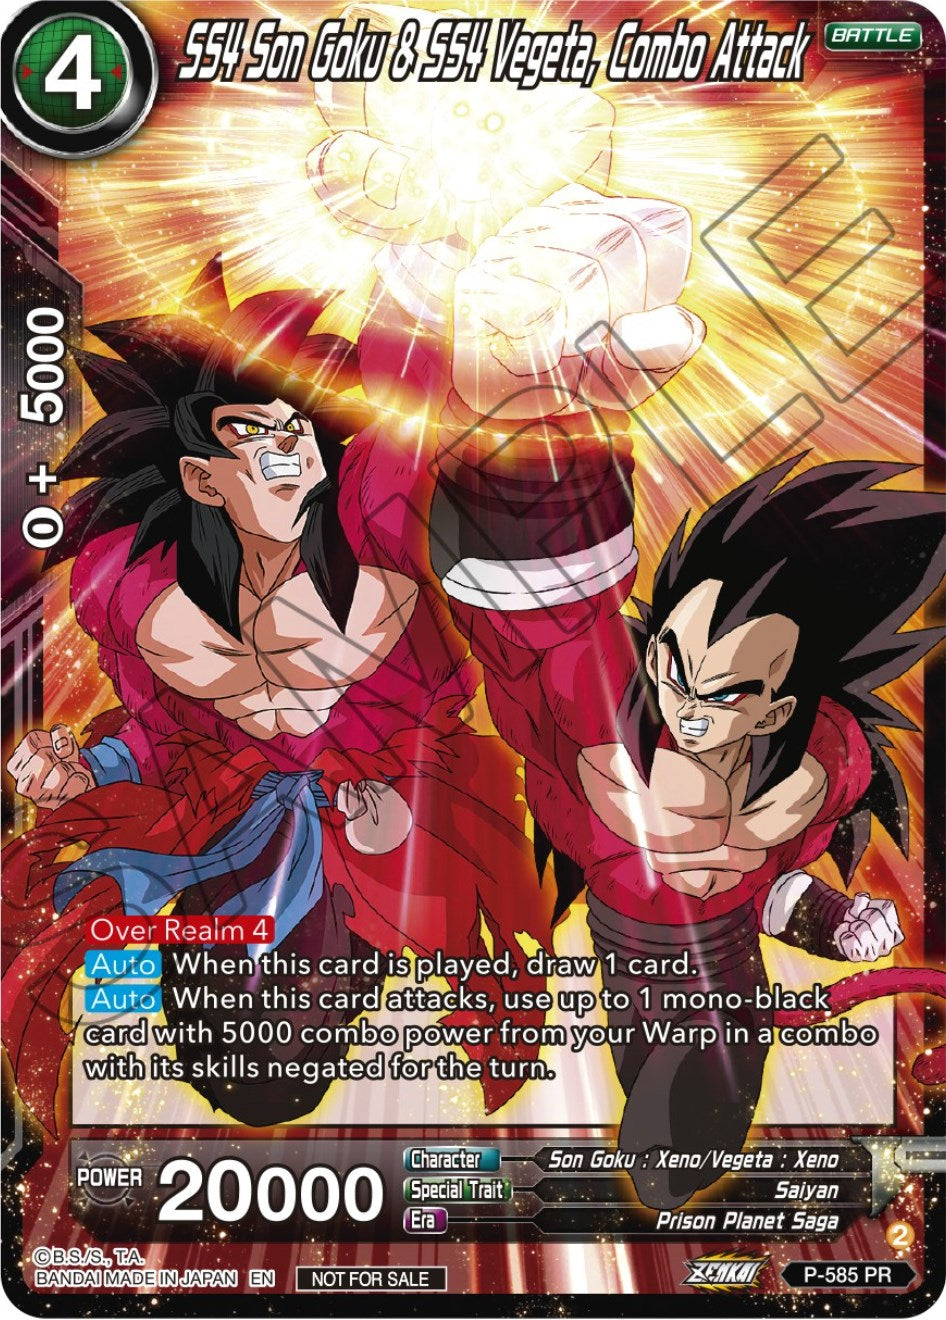 SS4 Son Goku & SS4 Vegeta, Combo Attack (Zenkai Series Tournament Pack Vol.7) (P-585) [Tournament Promotion Cards] | Sanctuary Gaming